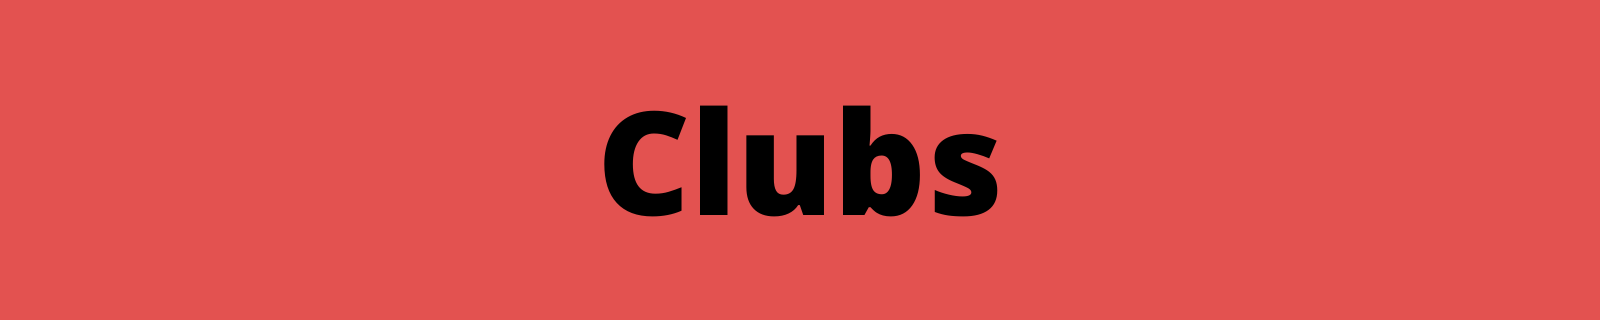 header that reads "clubs"